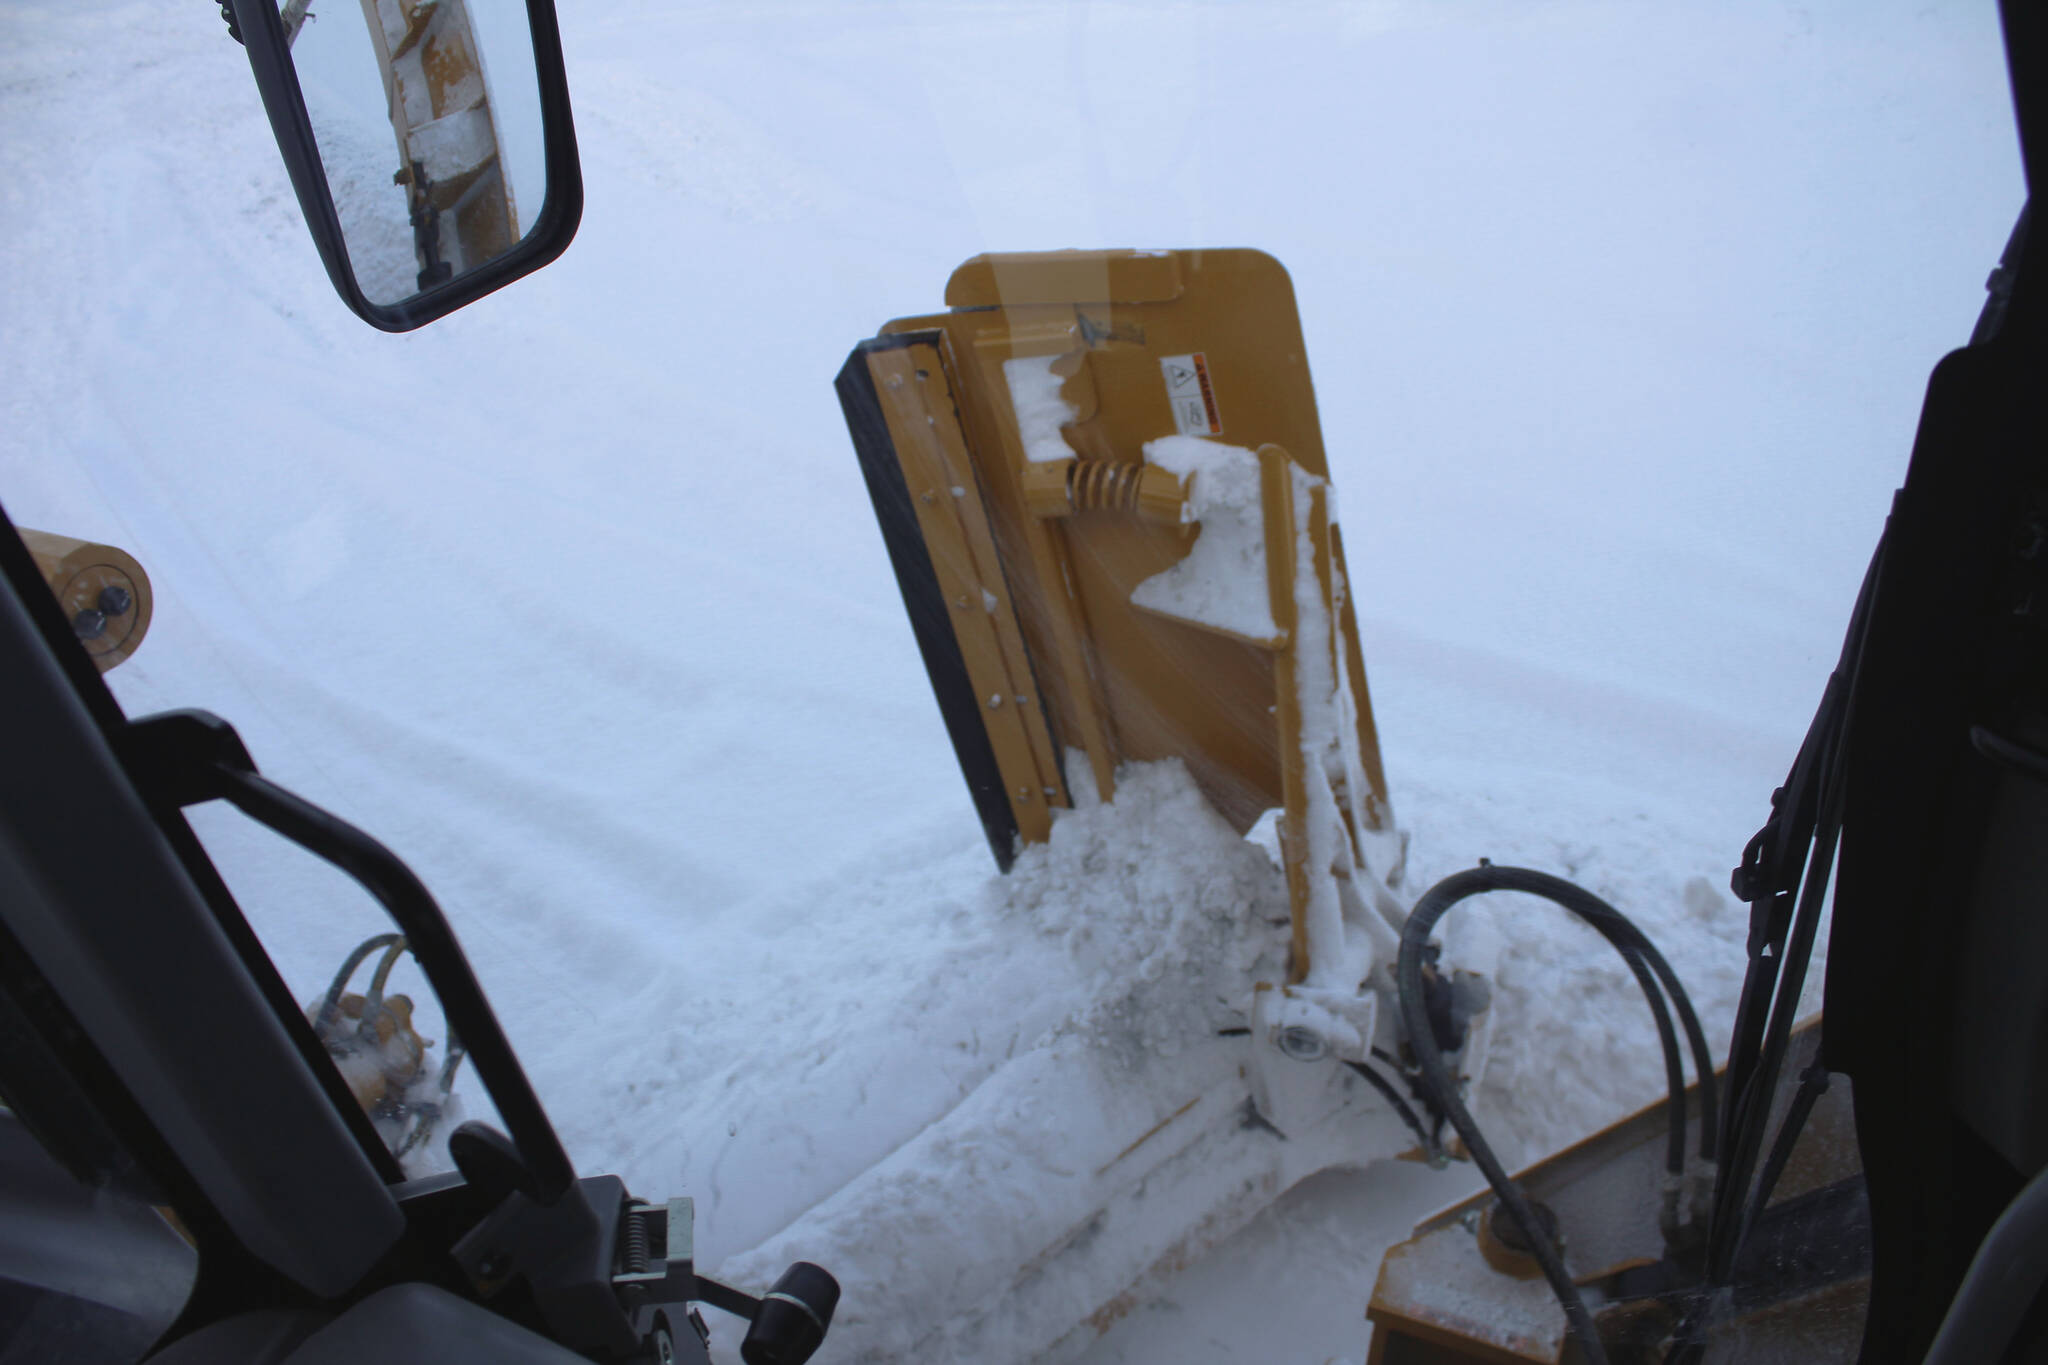 A City of Kenai grader collects snow along a roadway on Wednesday, Dec. 7, 2022, in Kenai, Alaska. (Ashlyn O’Hara/Peninsula Clarion)